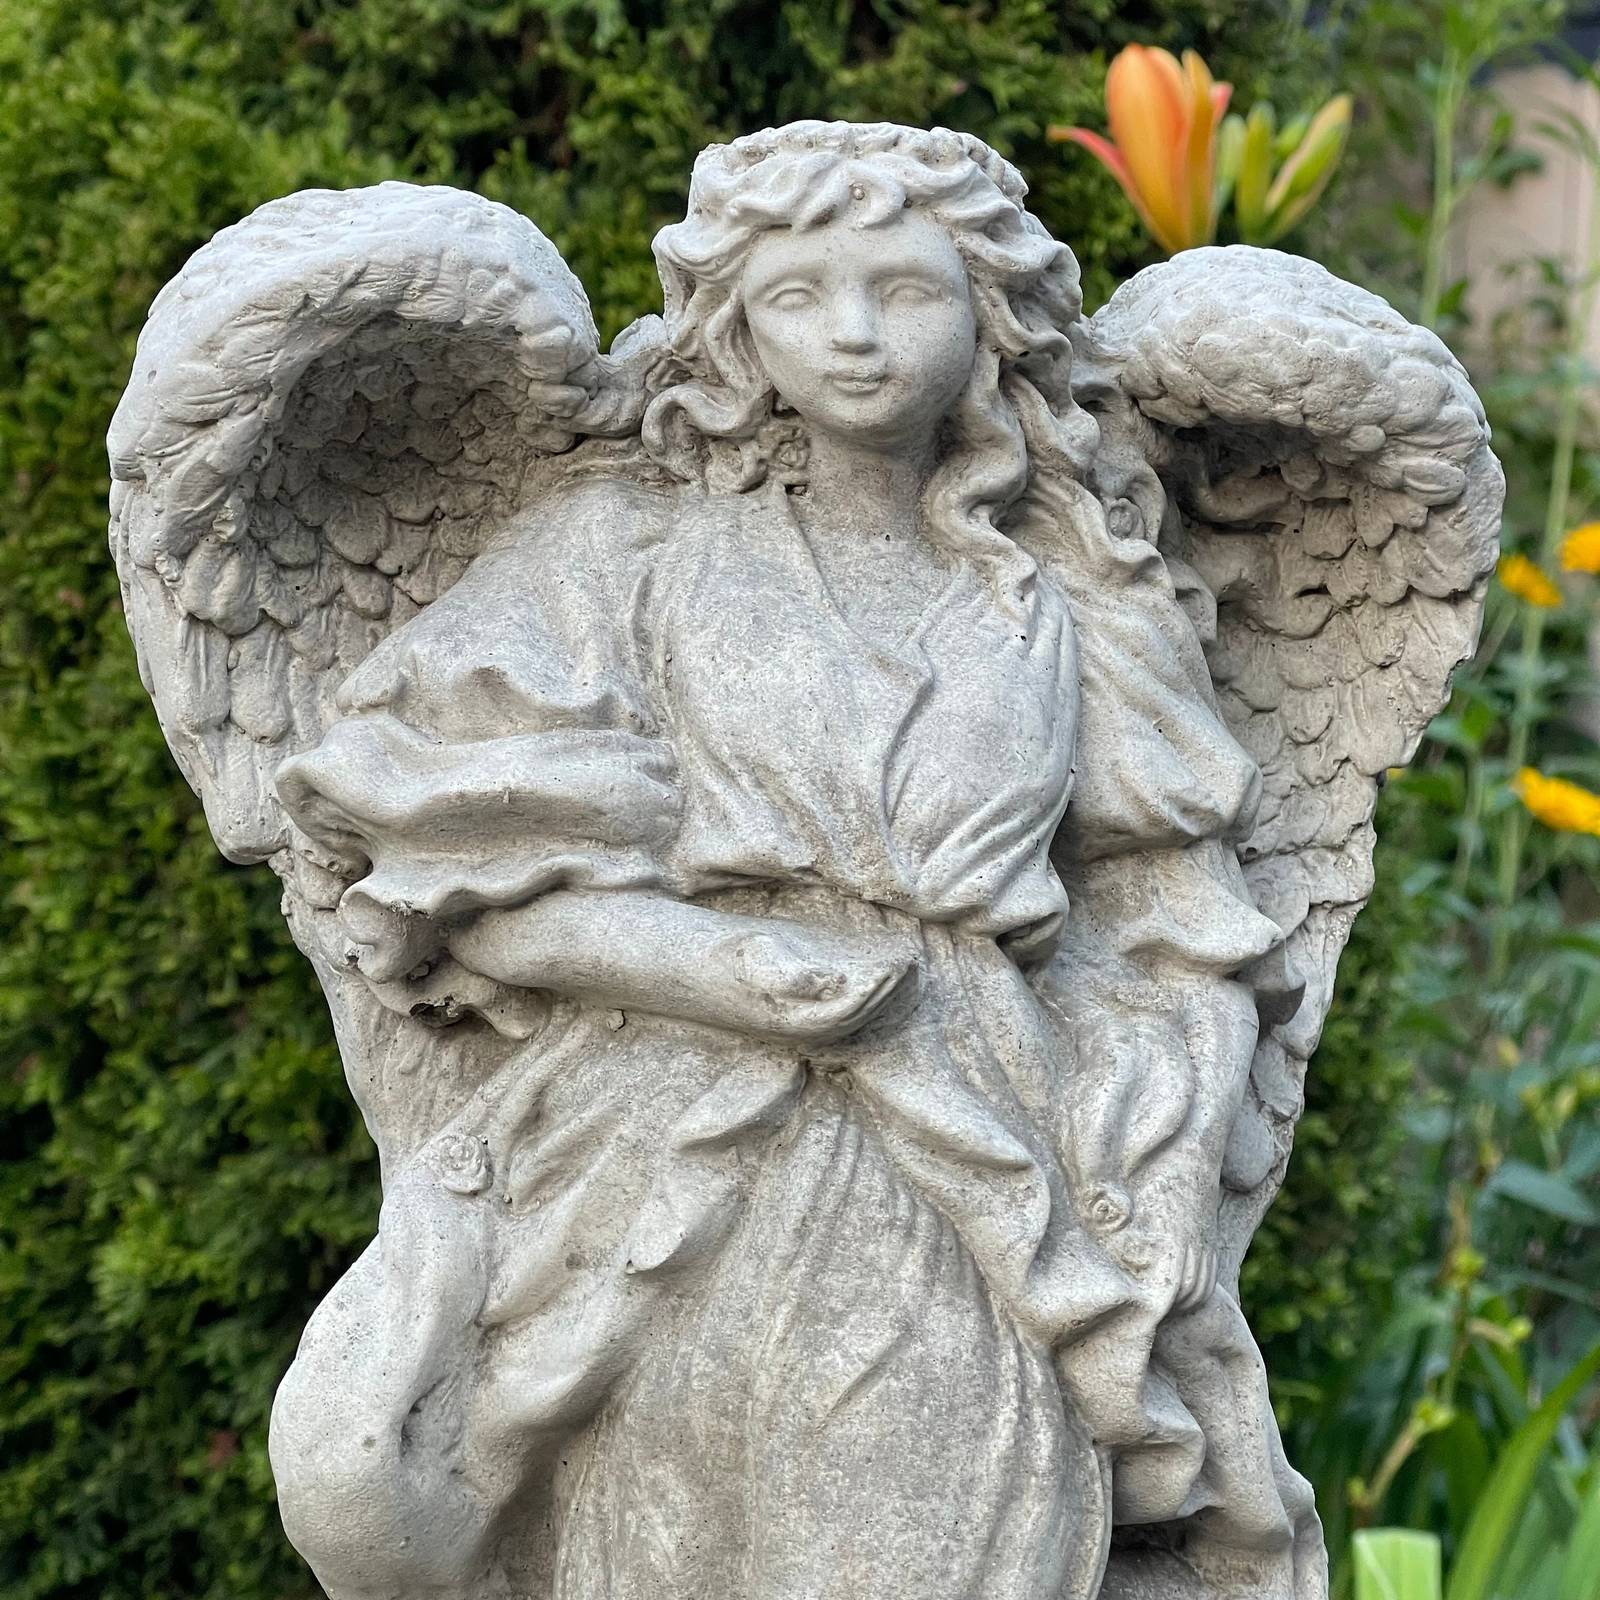 Large Angel Garden Statue 17" Outdoor Concrete Cherub Lawn Ornament Cement Outsi - $139.50